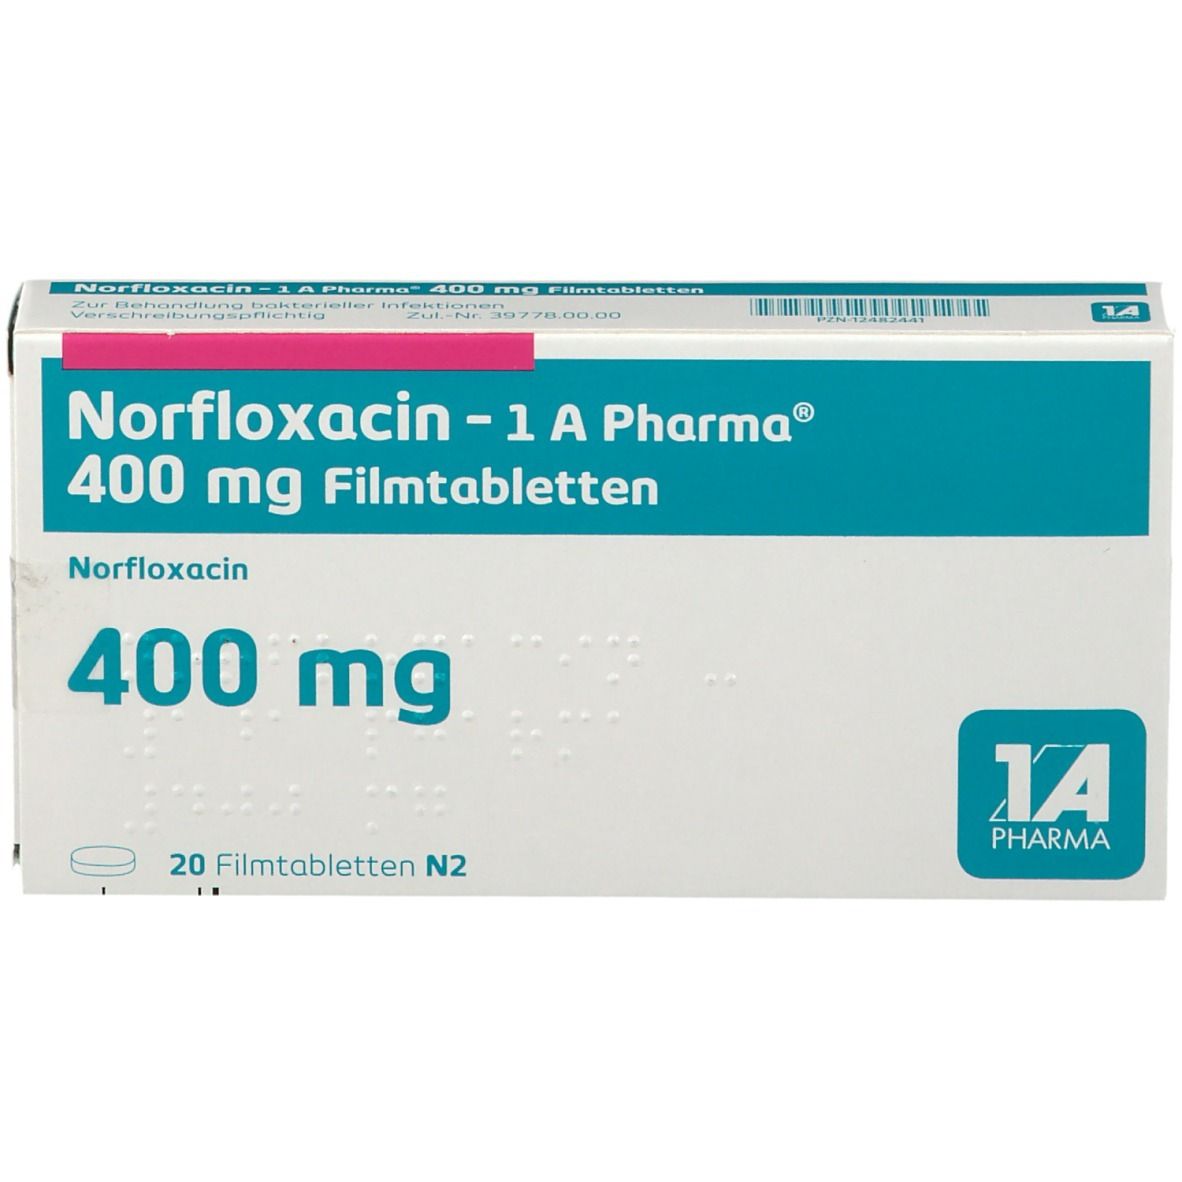 Norfloxacin - 1 A Pharma® 400 mg